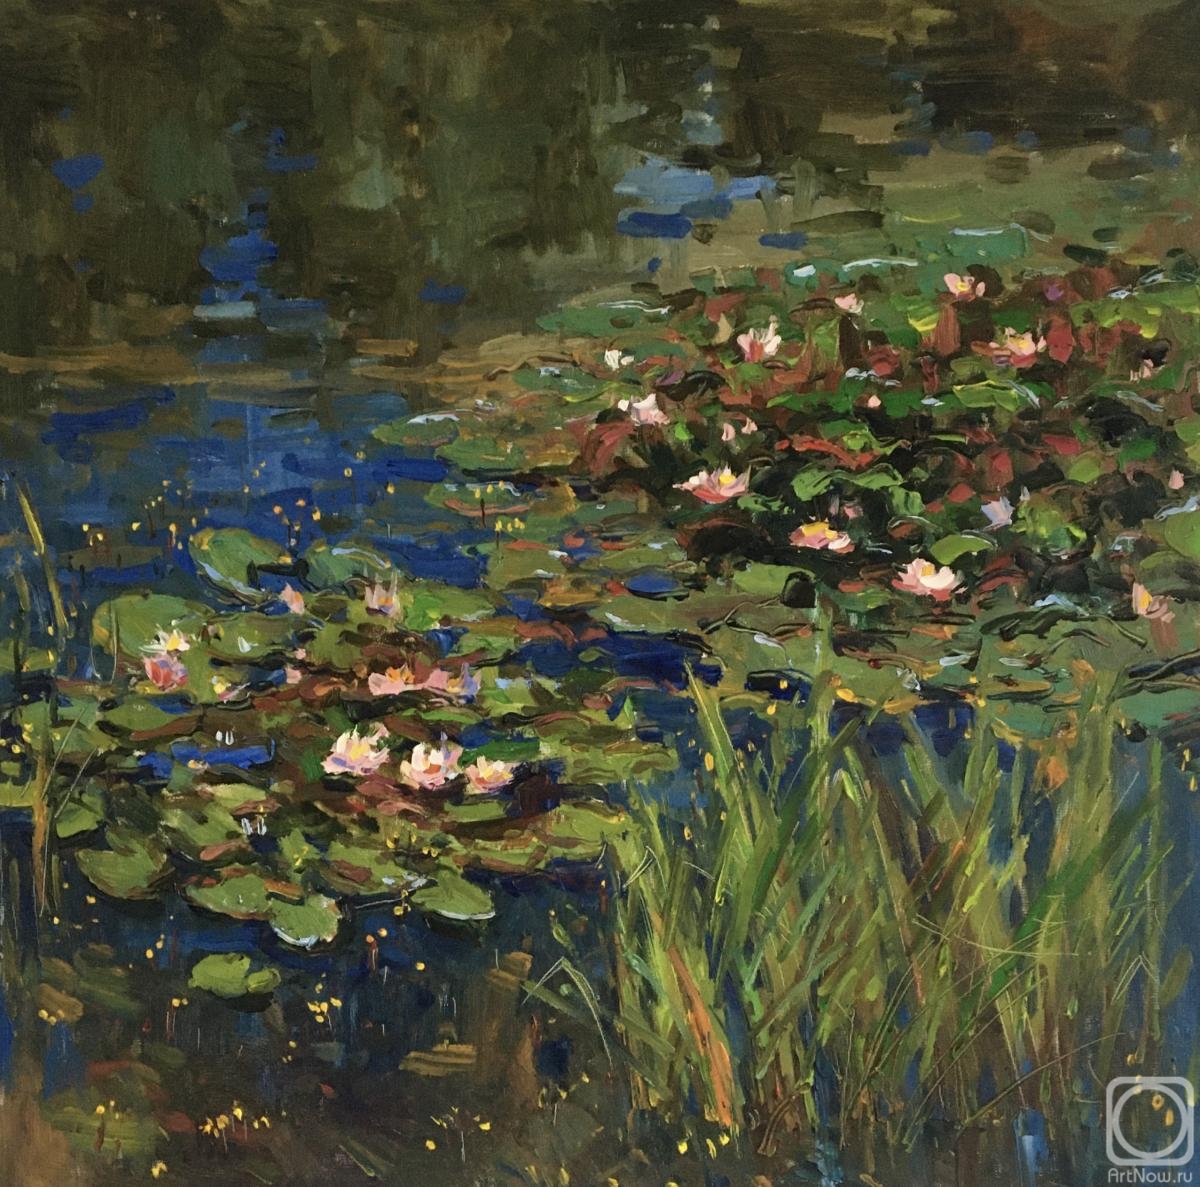 Ostrovskaya Elena. Pond with pink water lilies